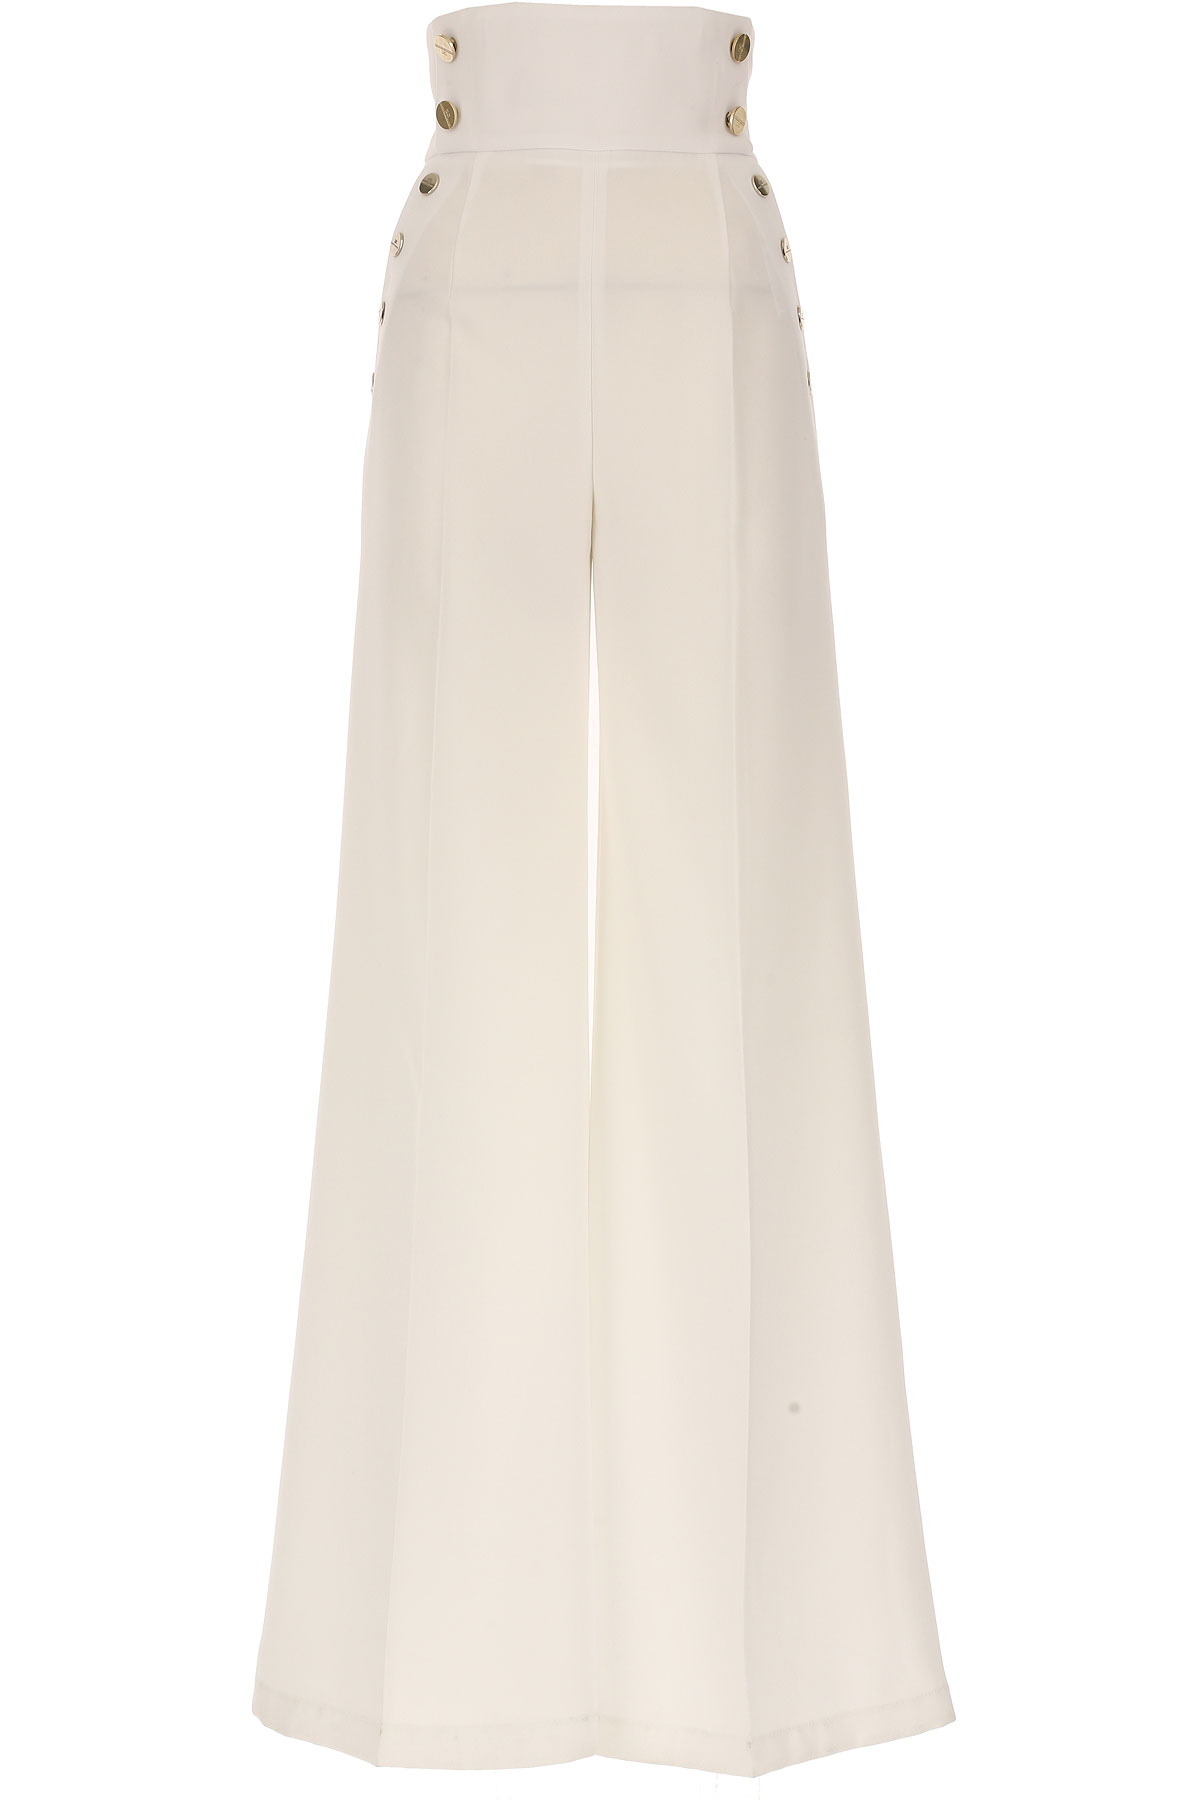 Elisabetta Franchi Pantalon Femme, Blanc, Polyester, 2017, 40 42